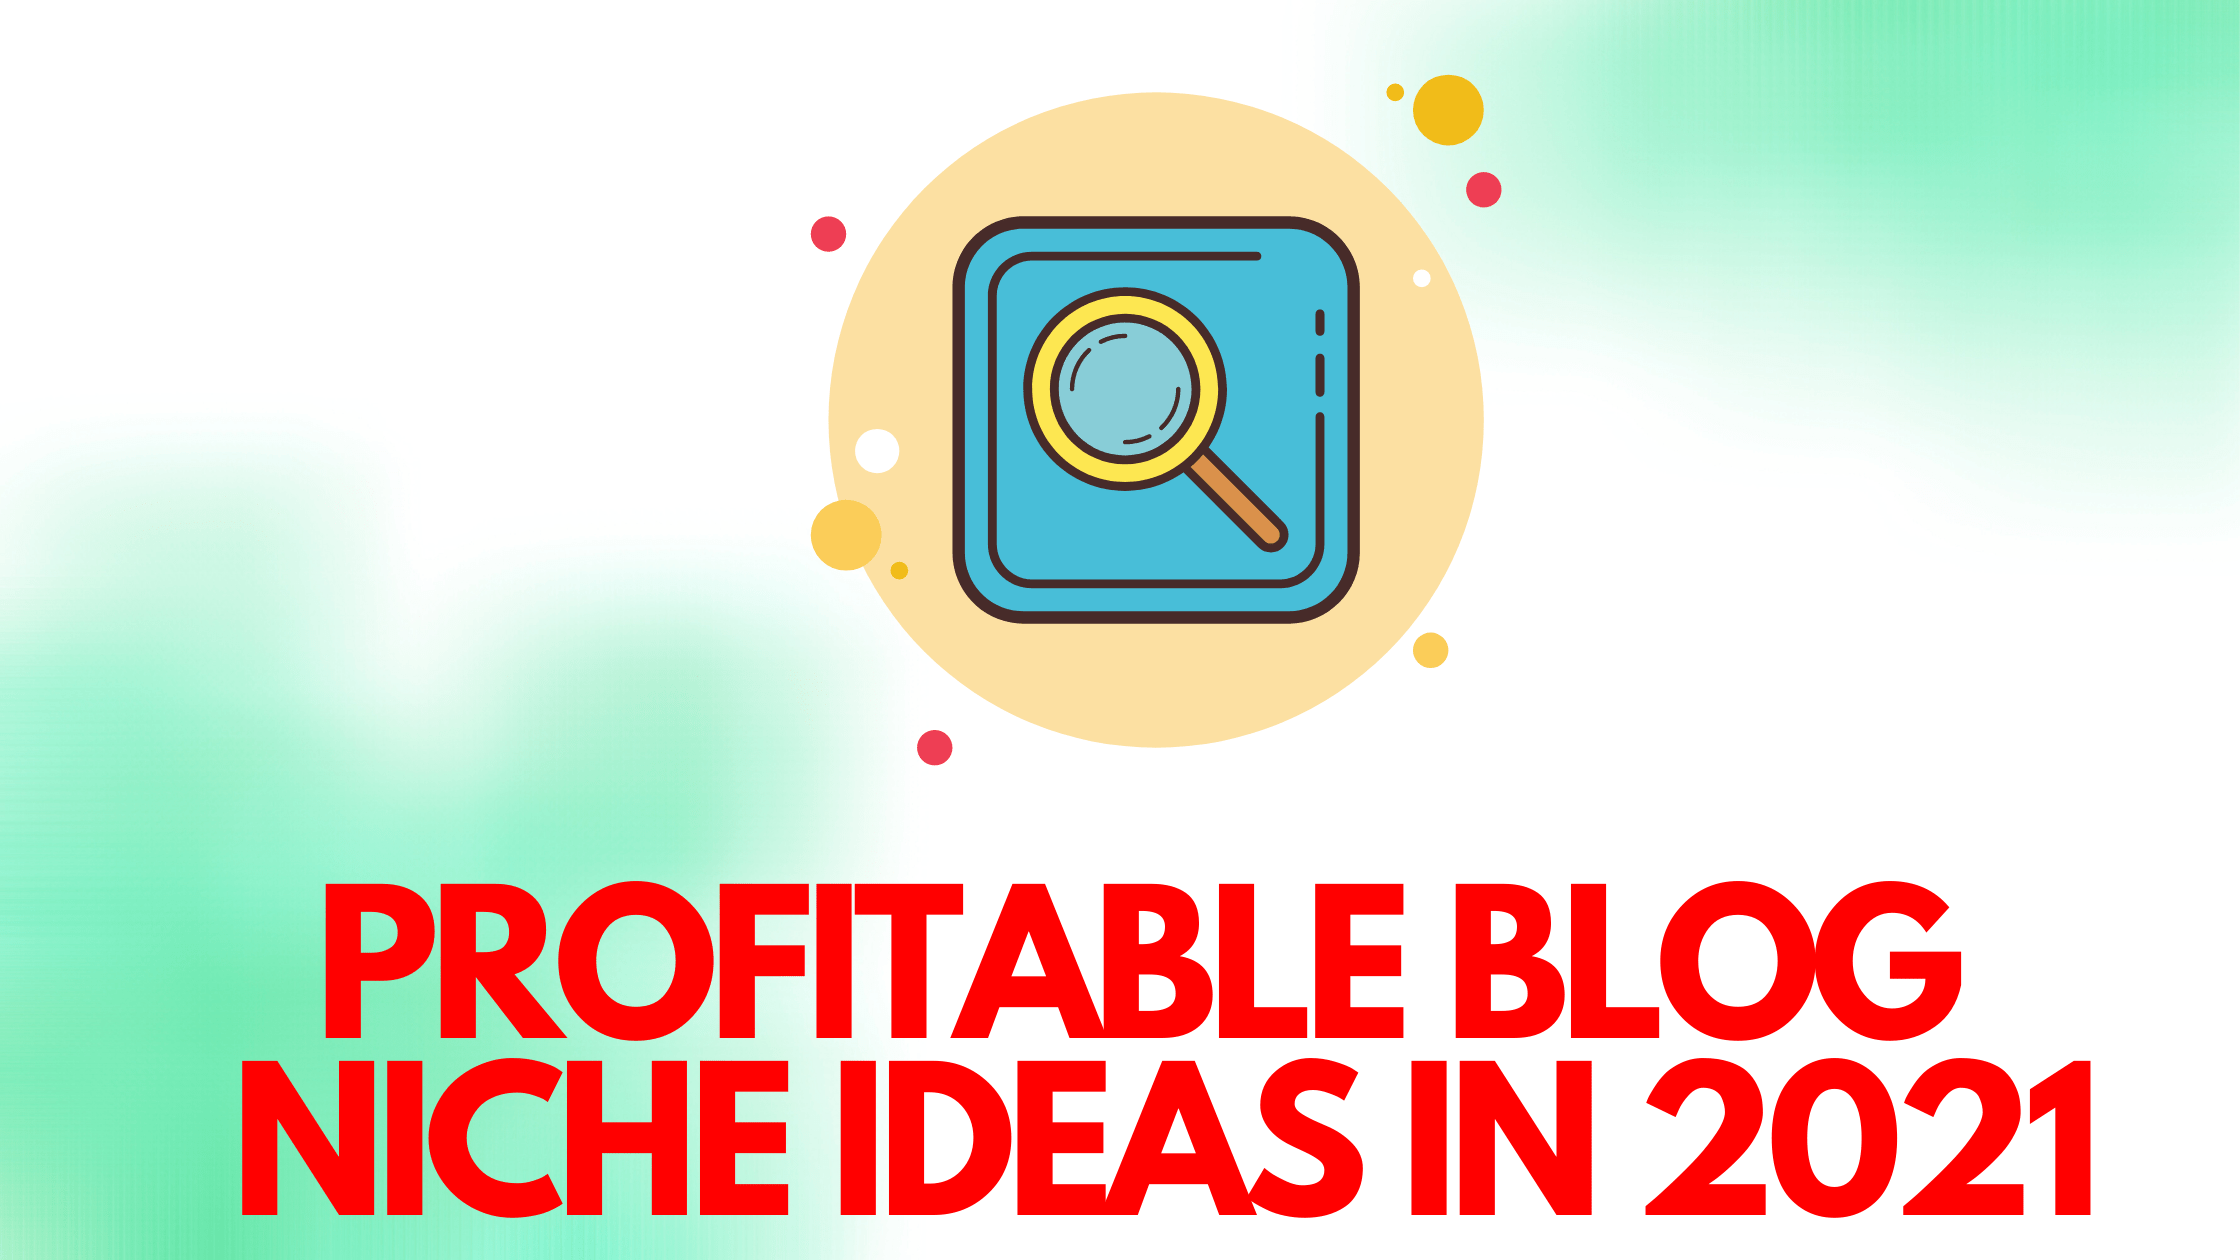 Profitable Blog Niche Ideas minidea